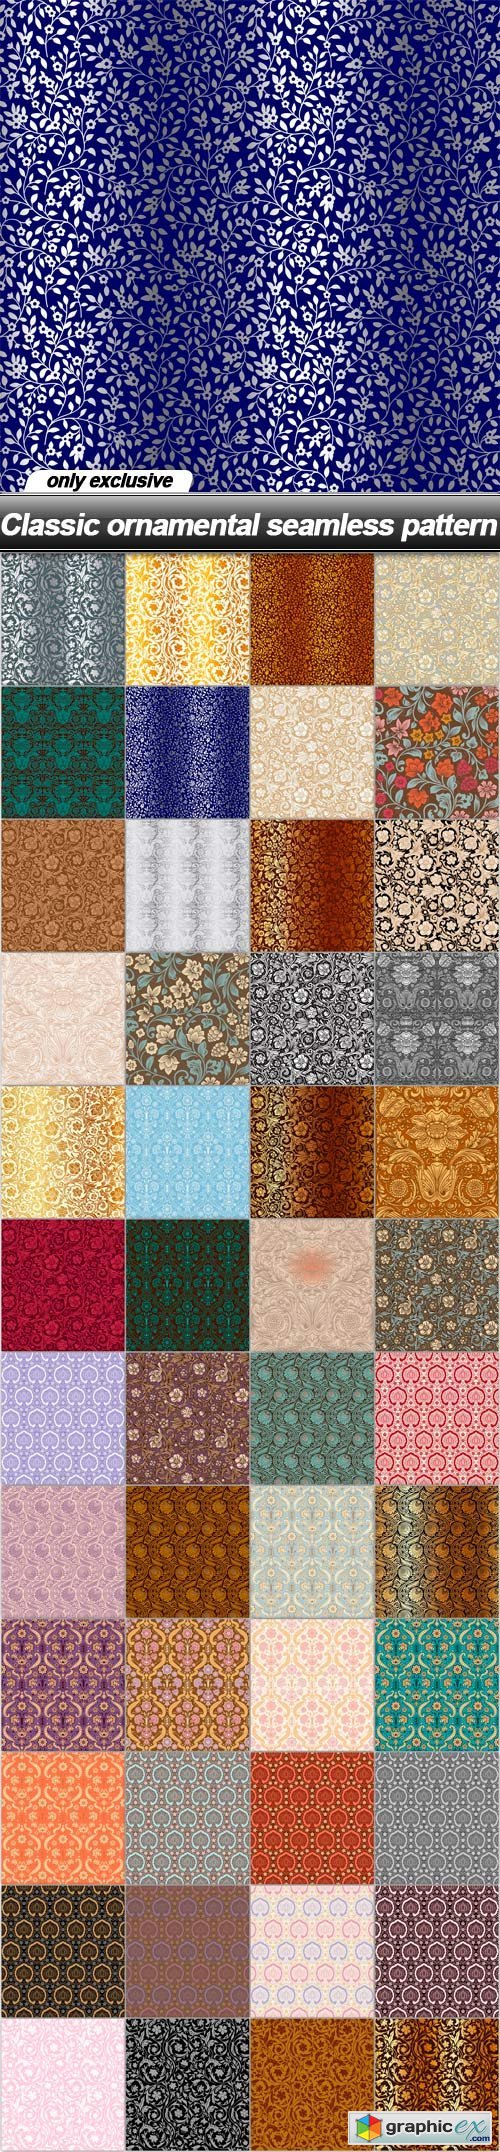 Classic ornamental seamless pattern - 48 EPS